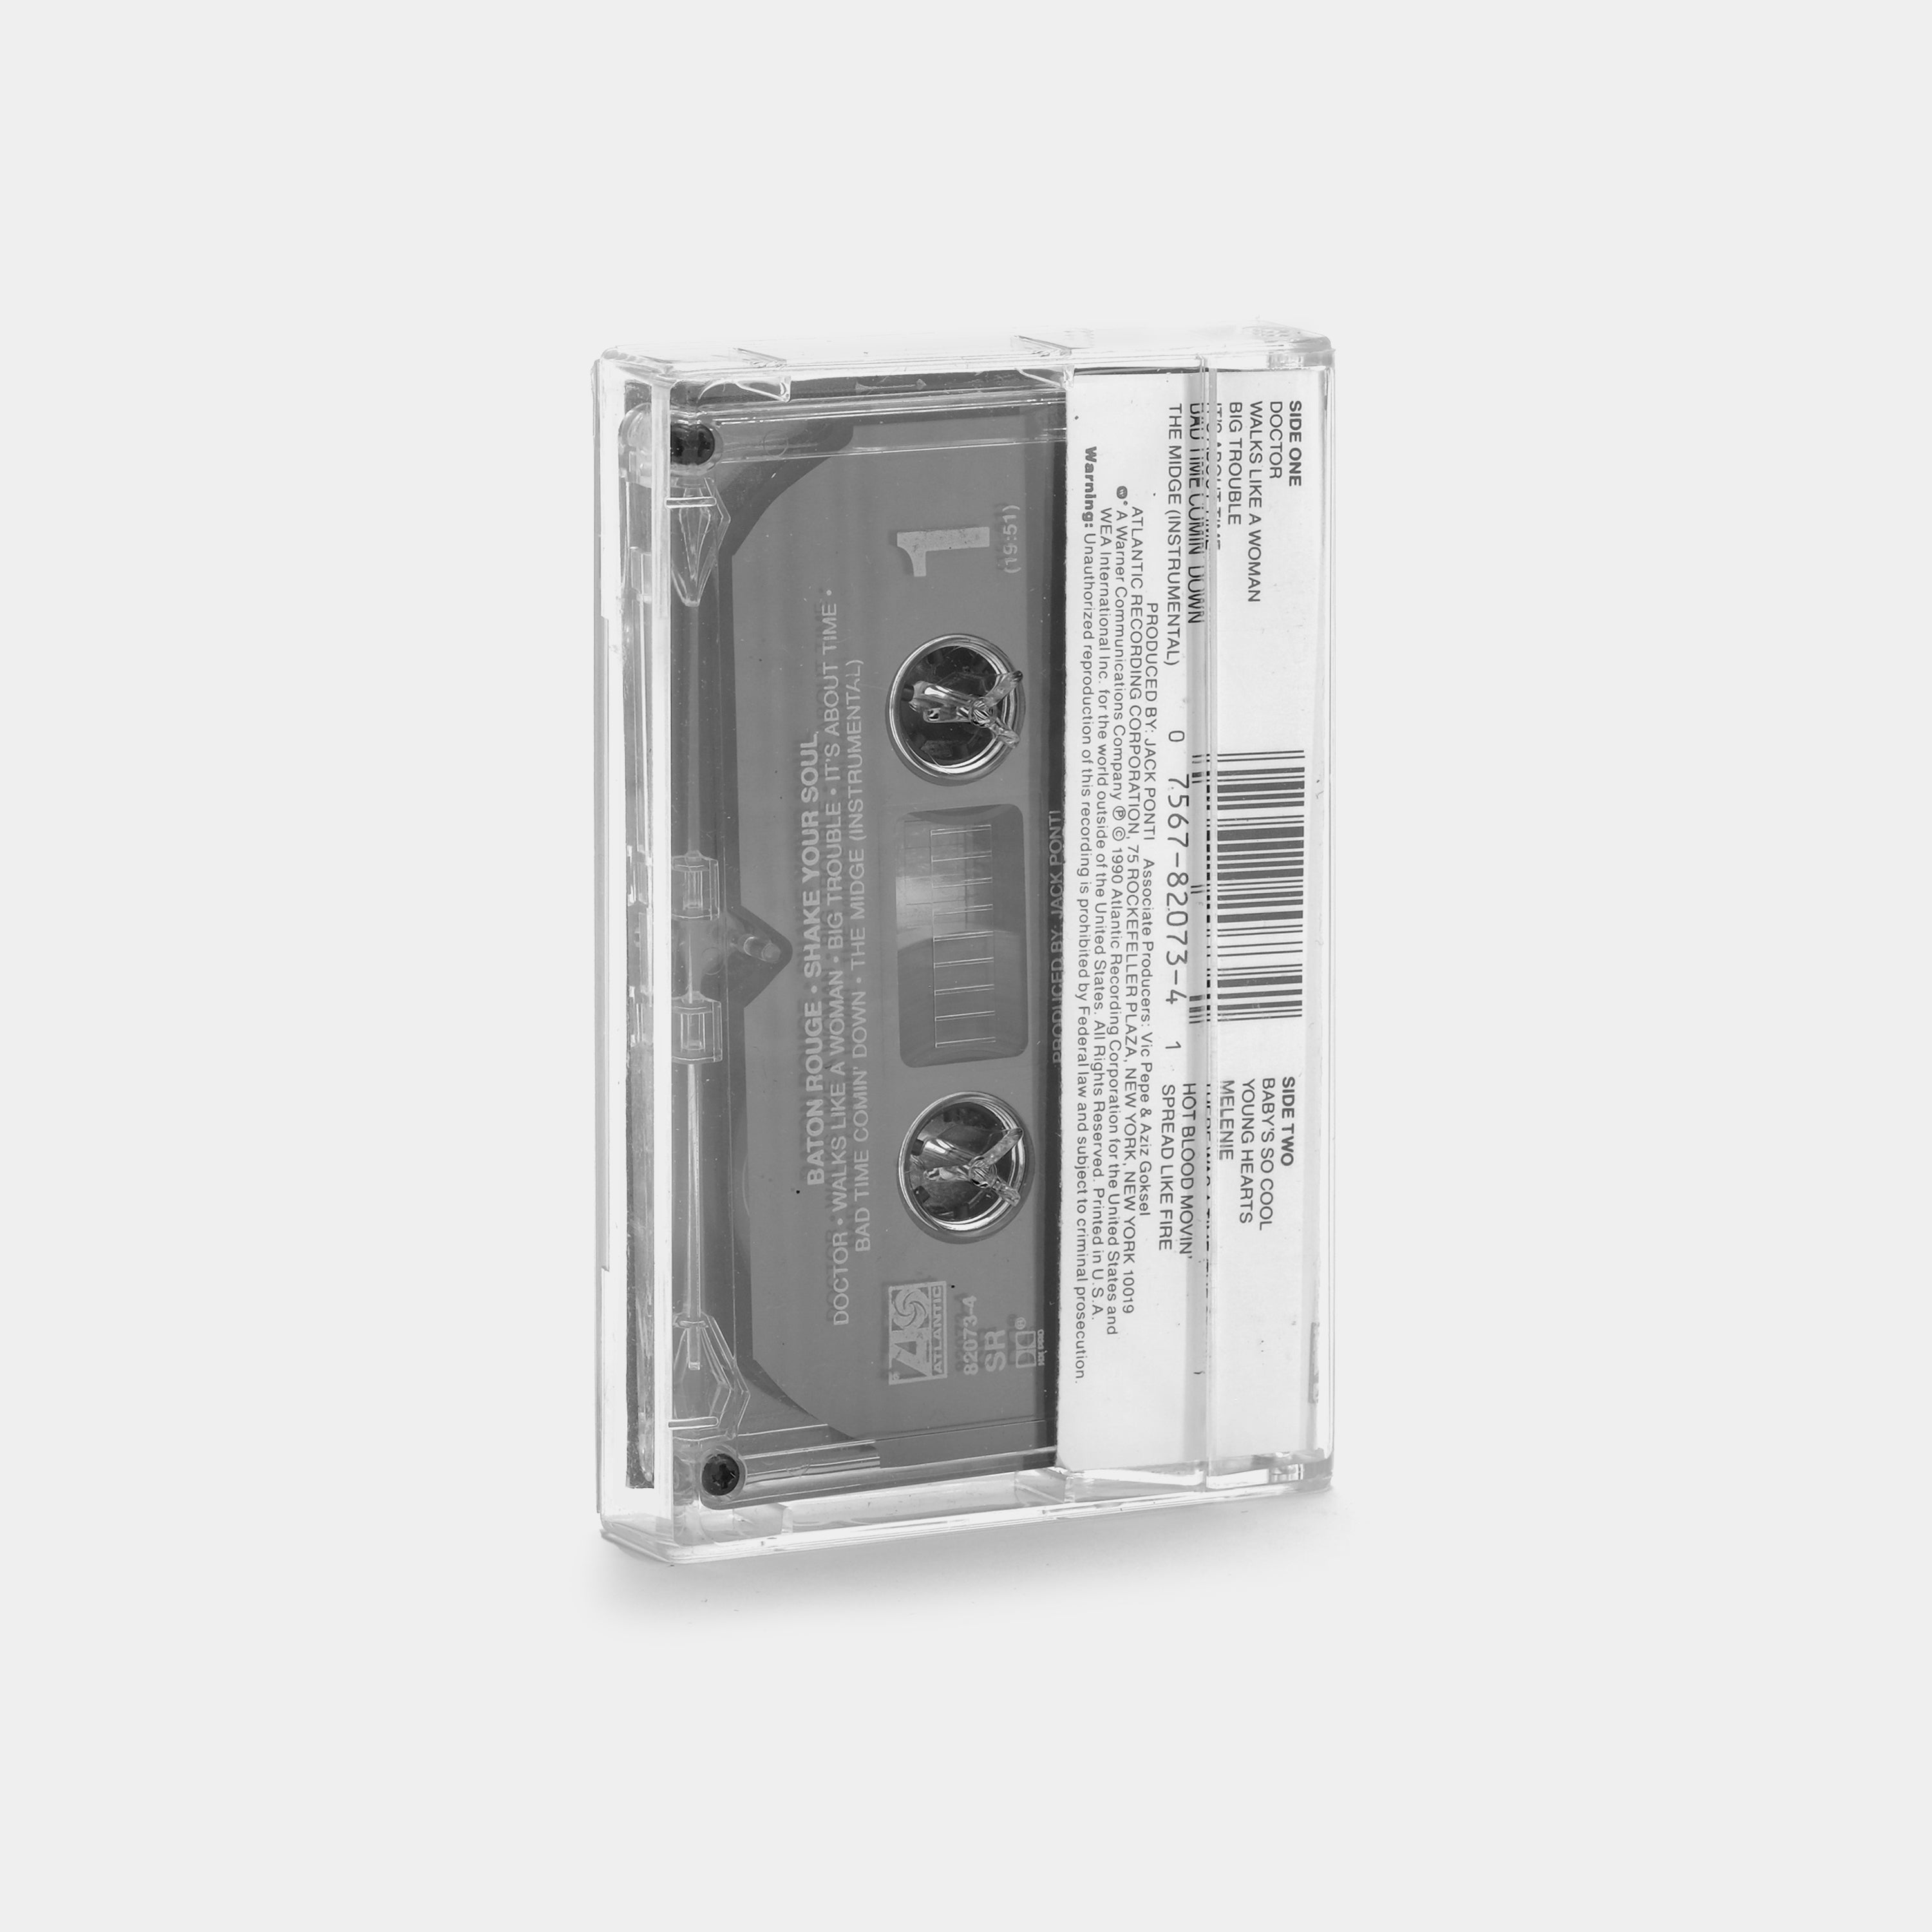 Baton Rouge - Shake Your Soul Cassette Tape